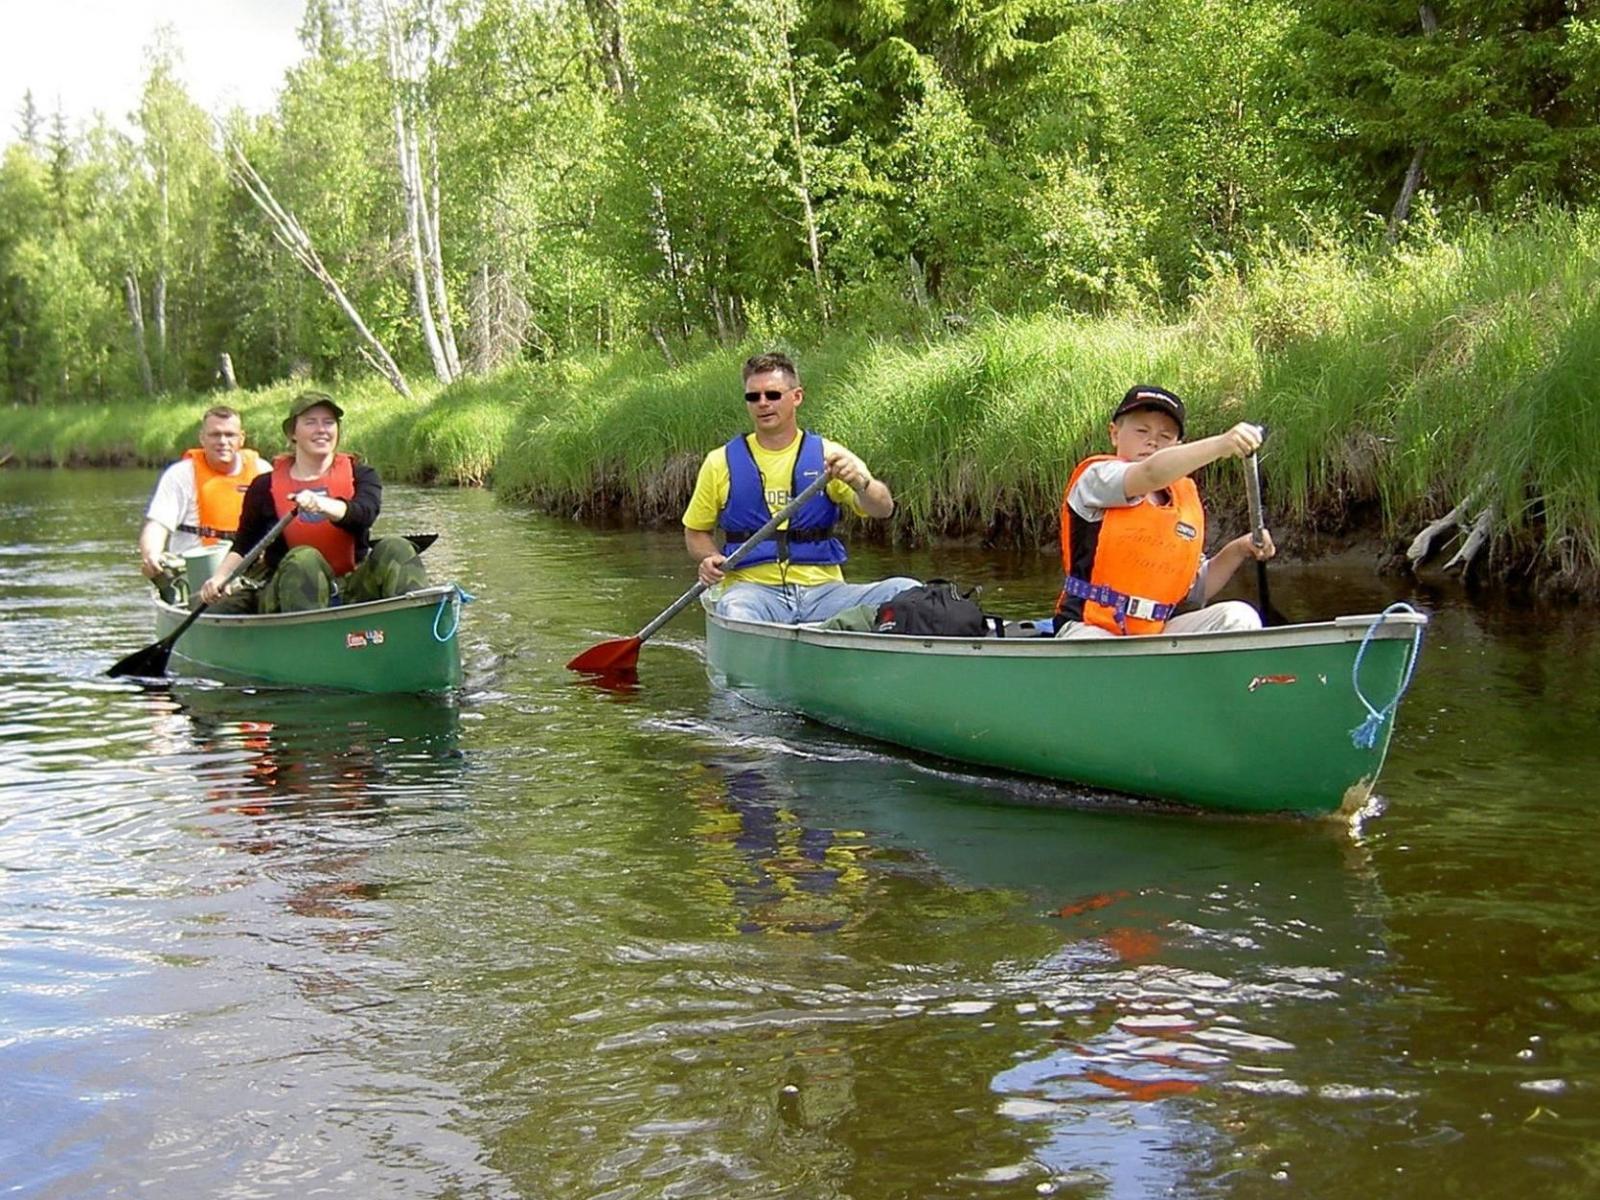 Canoeing in Junsele